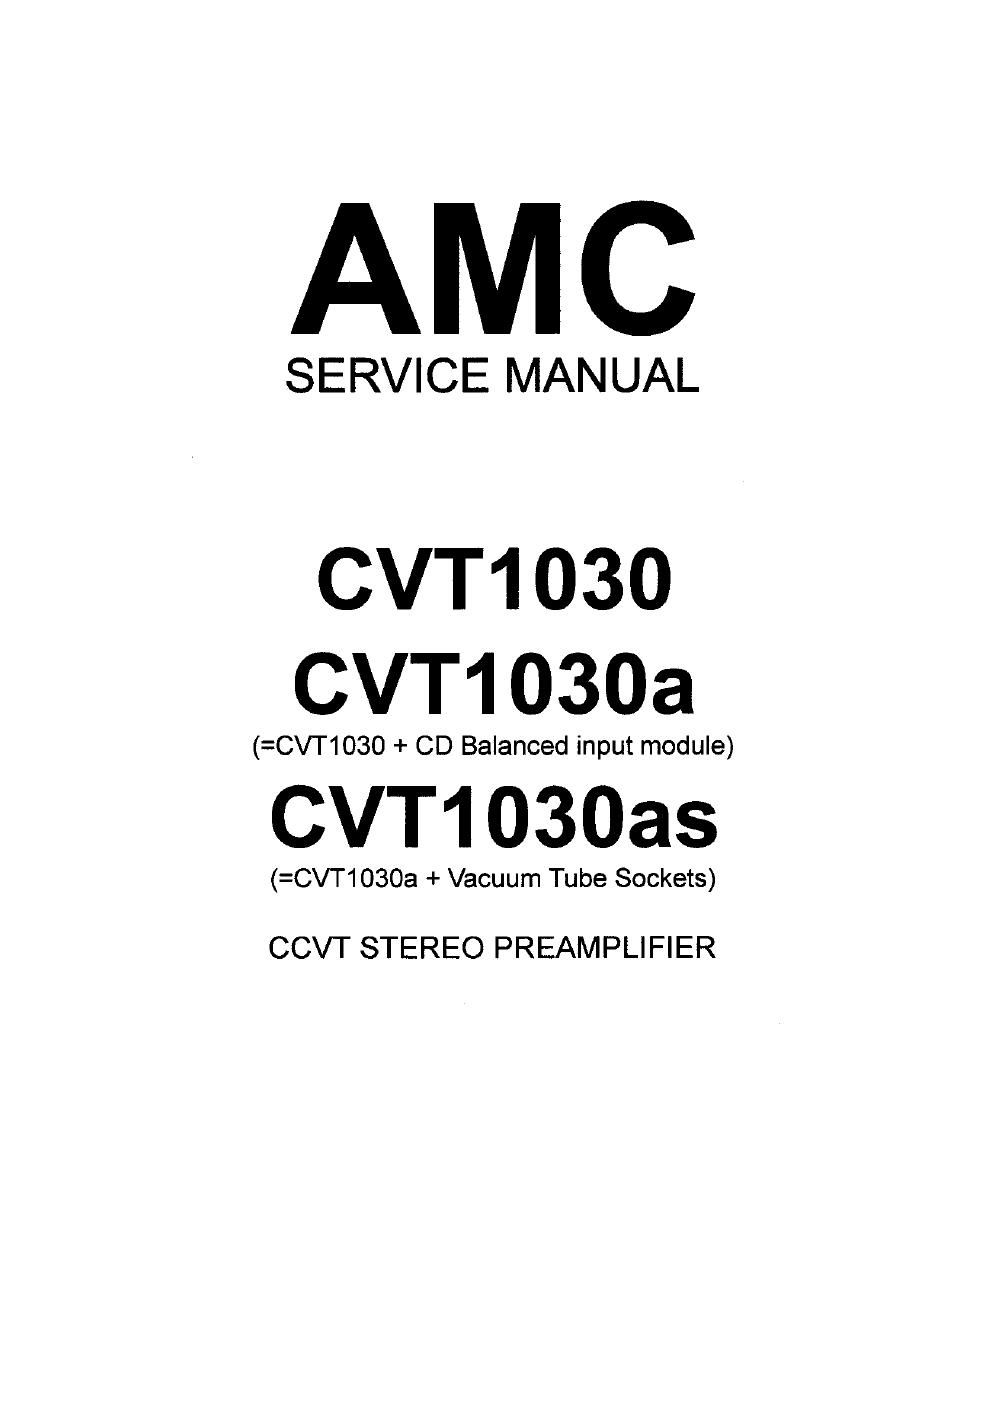 Amc cvt 1030A pre service manual